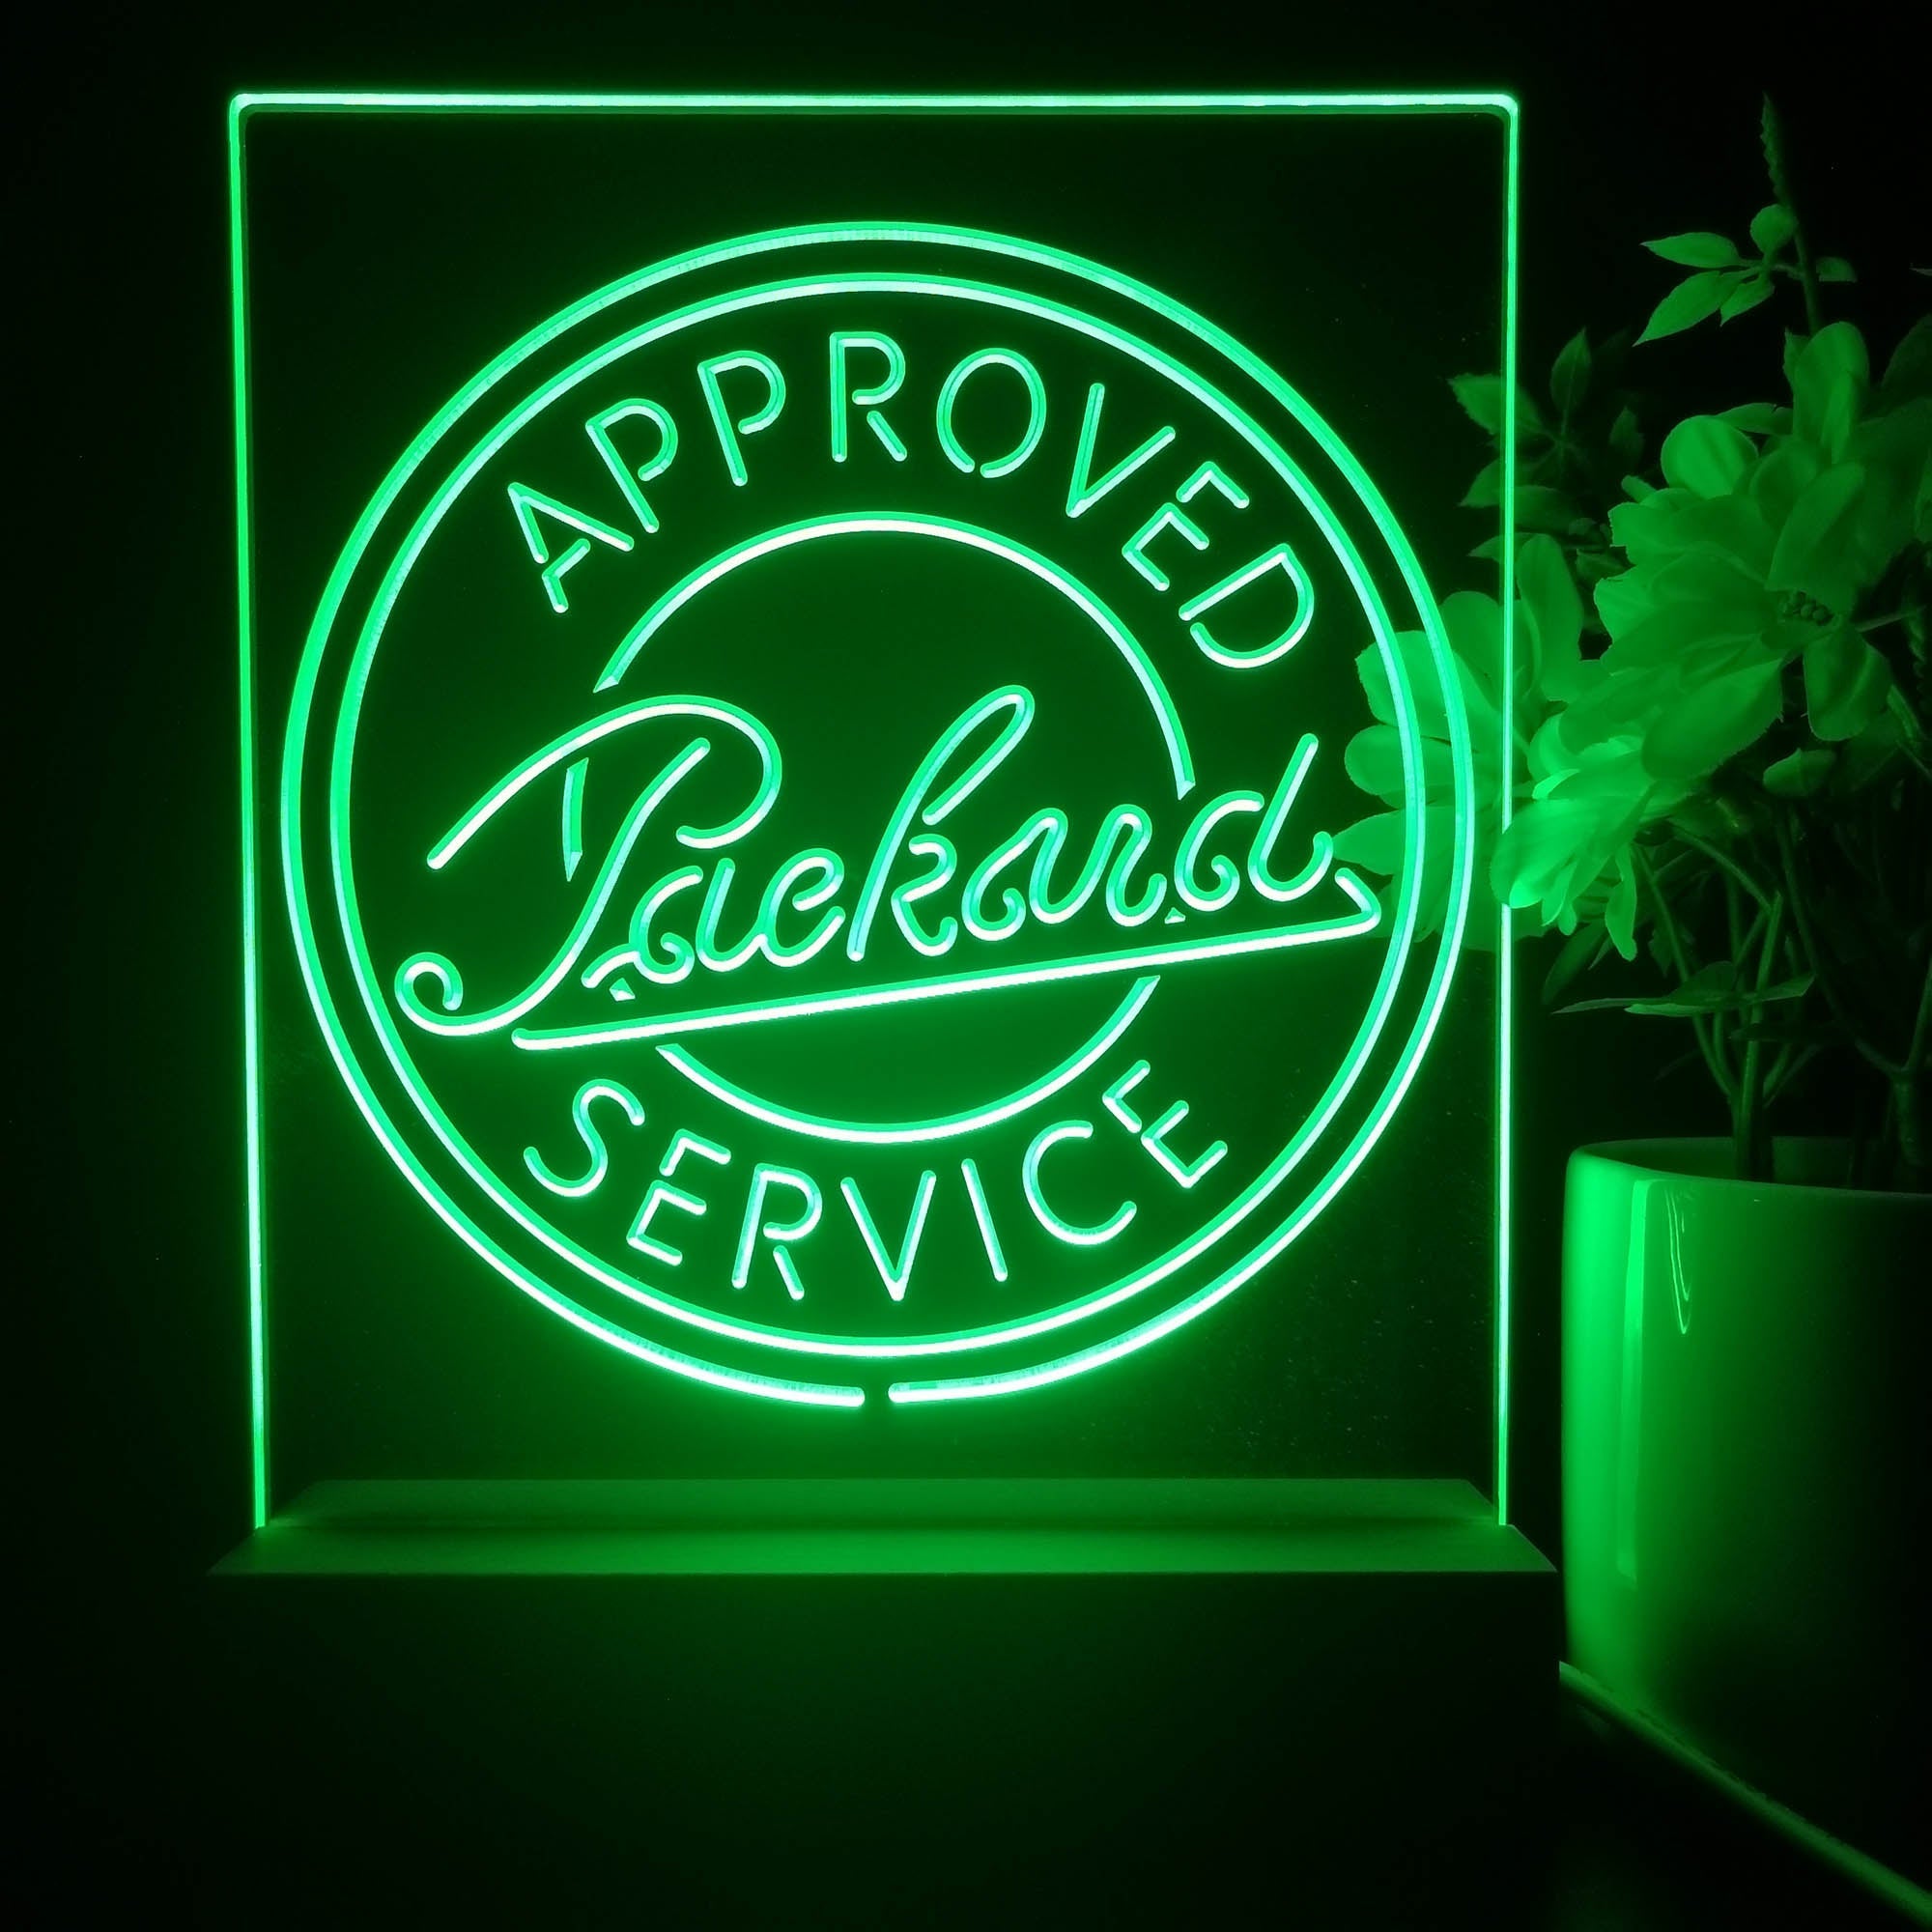 Approved Packard Service Garage 3D Night Light Sign Lamp